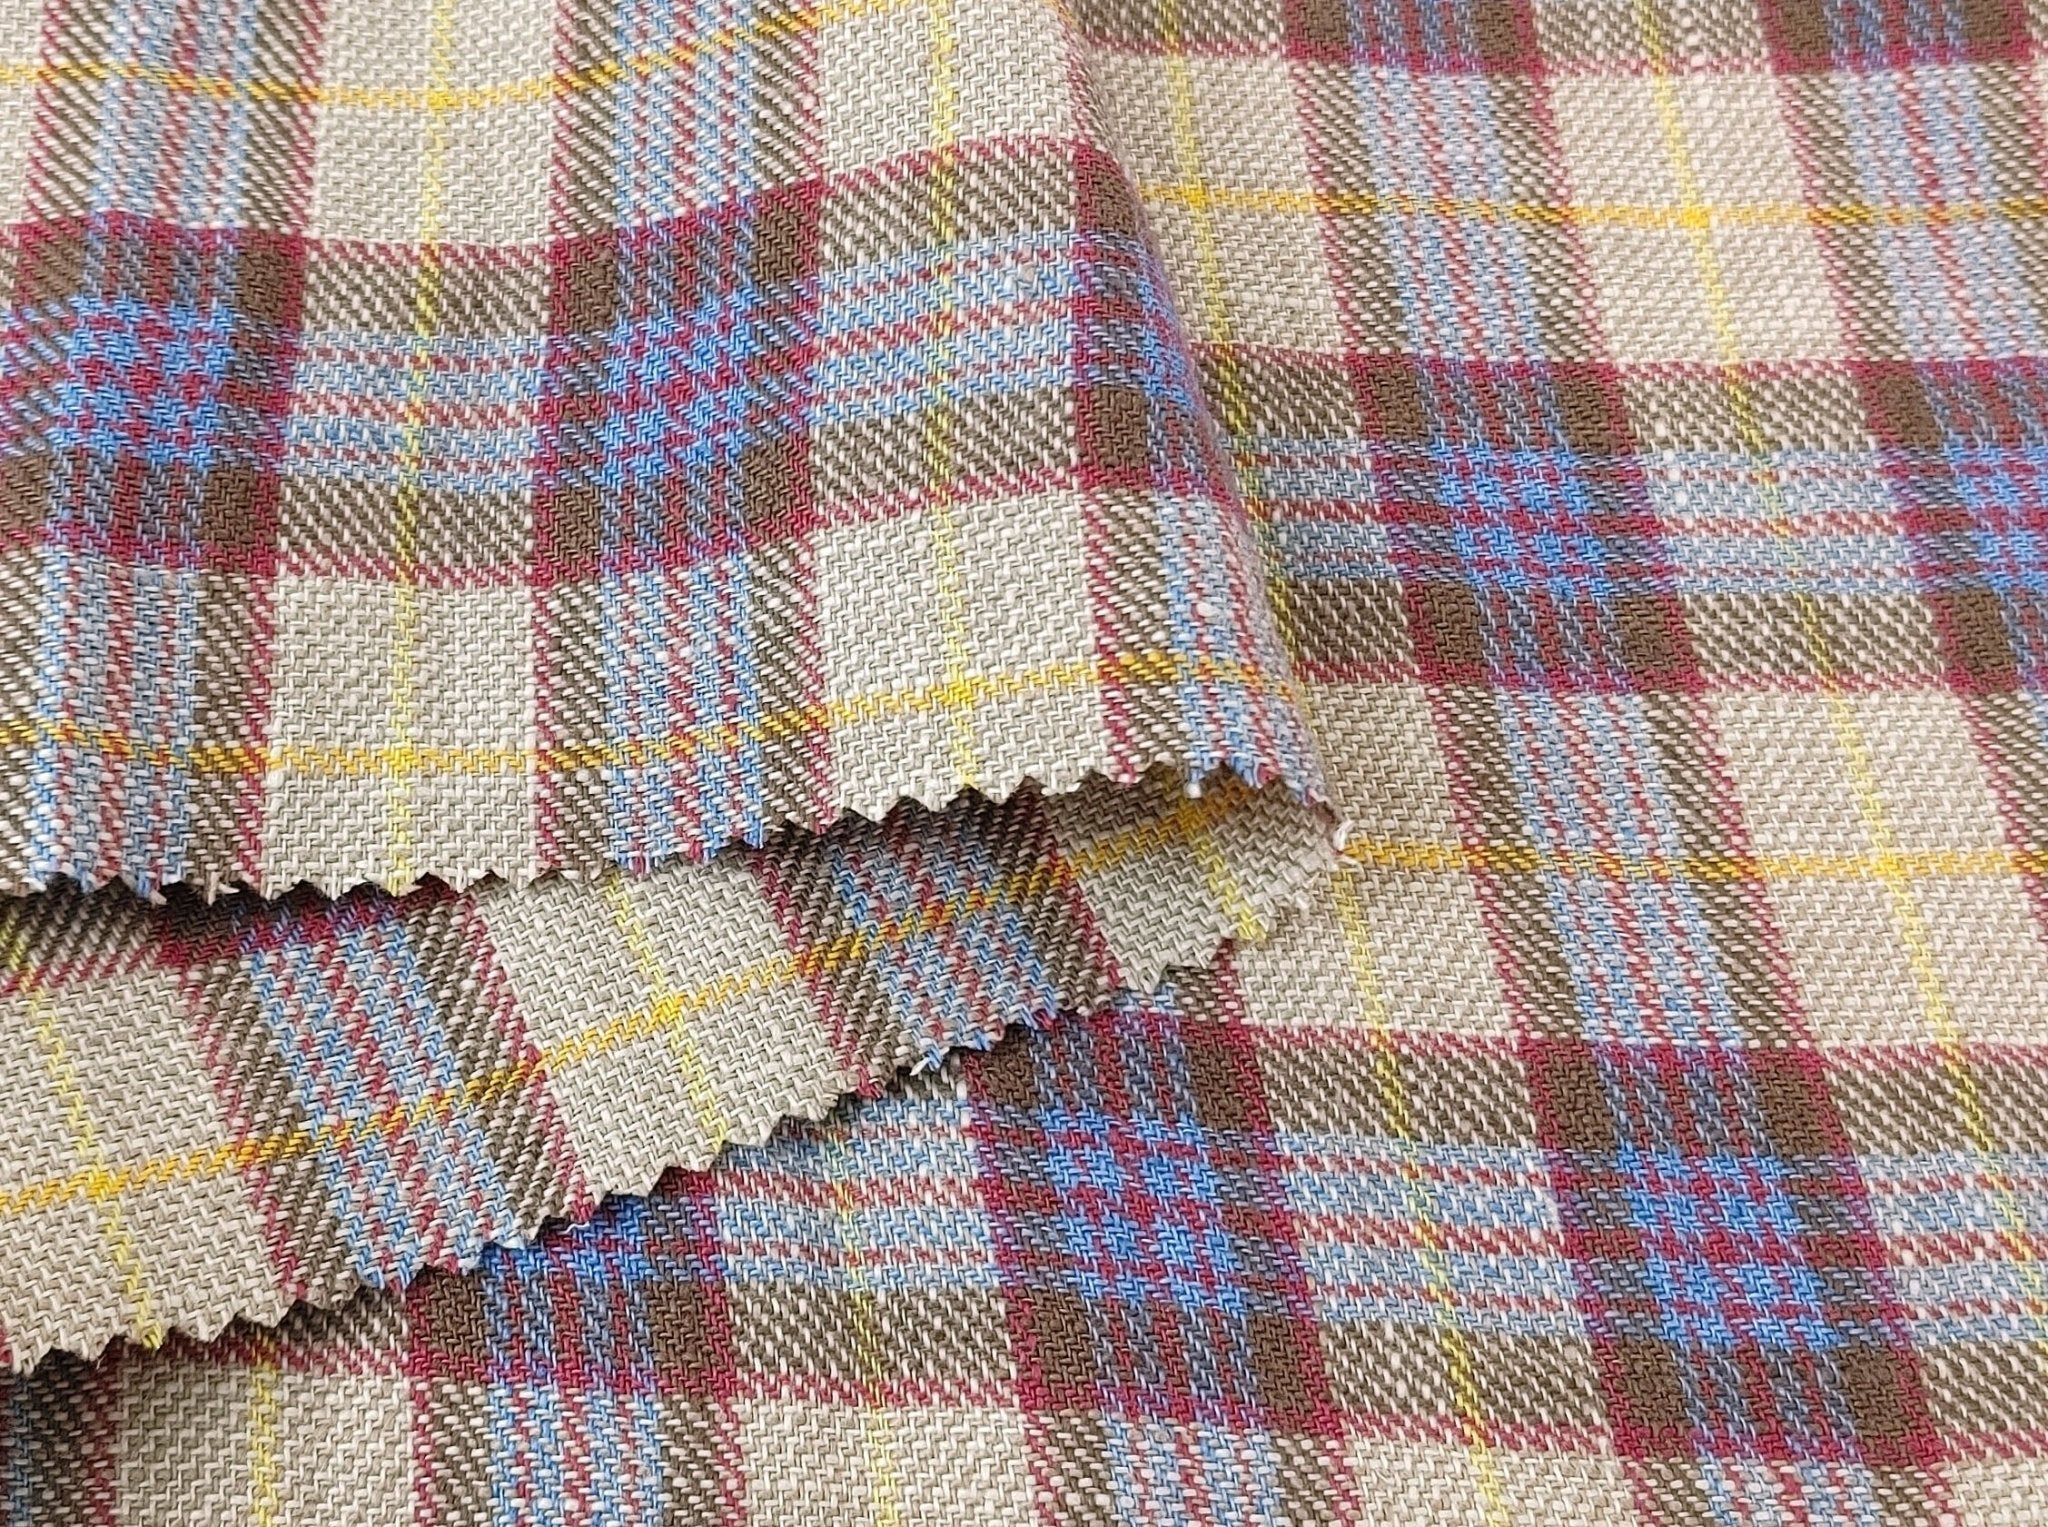 100% Linen Vintage Yarn Dyed Fabric in Glen Plaid Twill 7271 - The Linen Lab - Beige